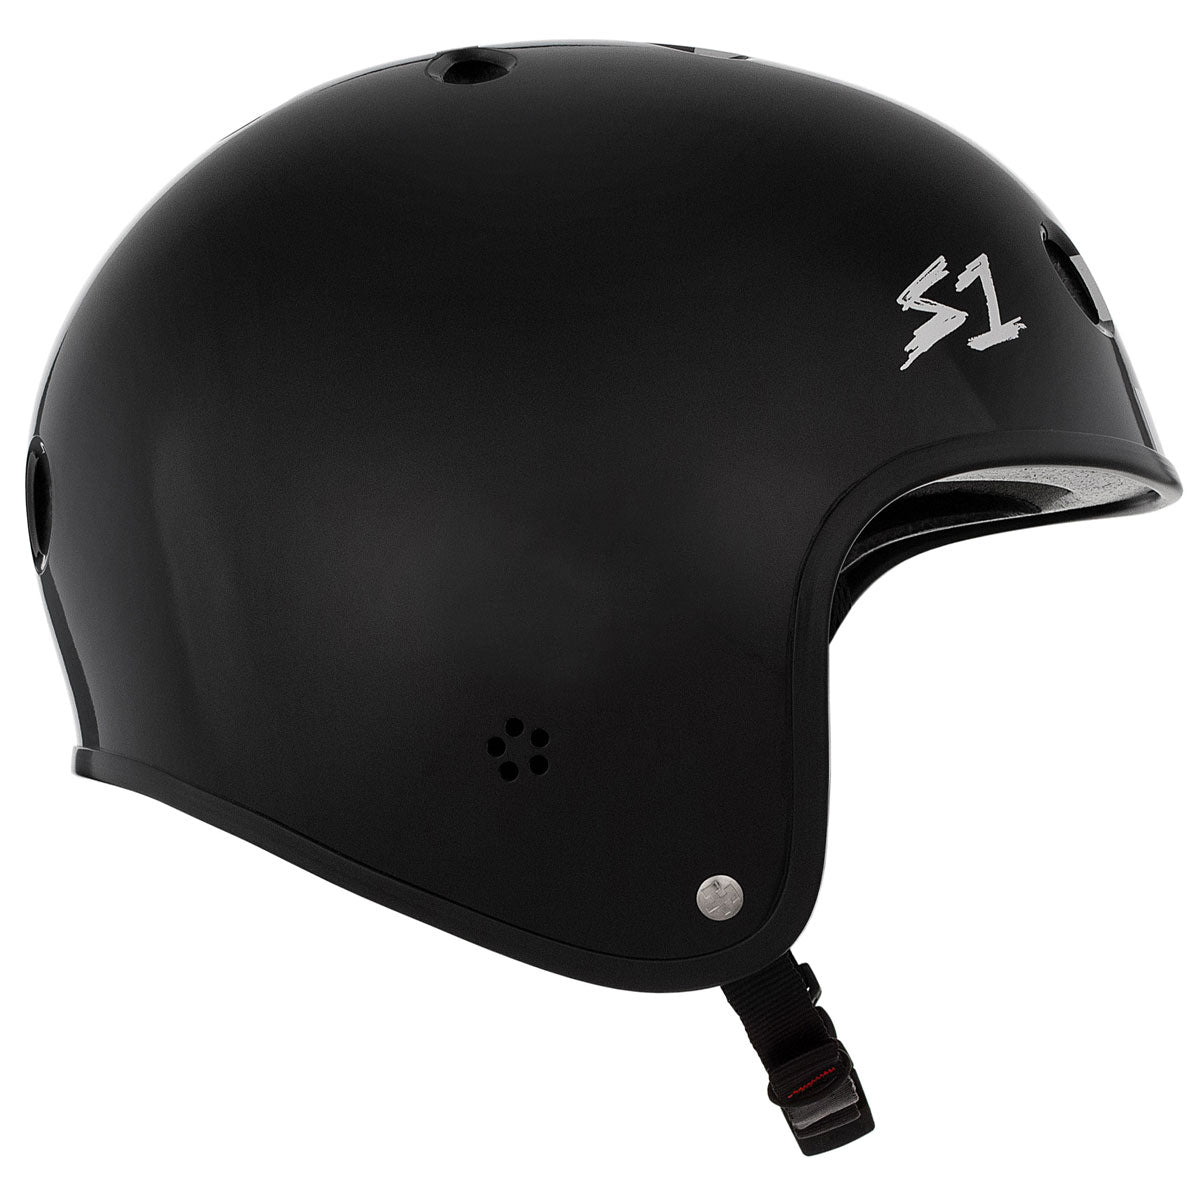 S-One Lifer Retro Helmet - Black Matte Checkers image 2